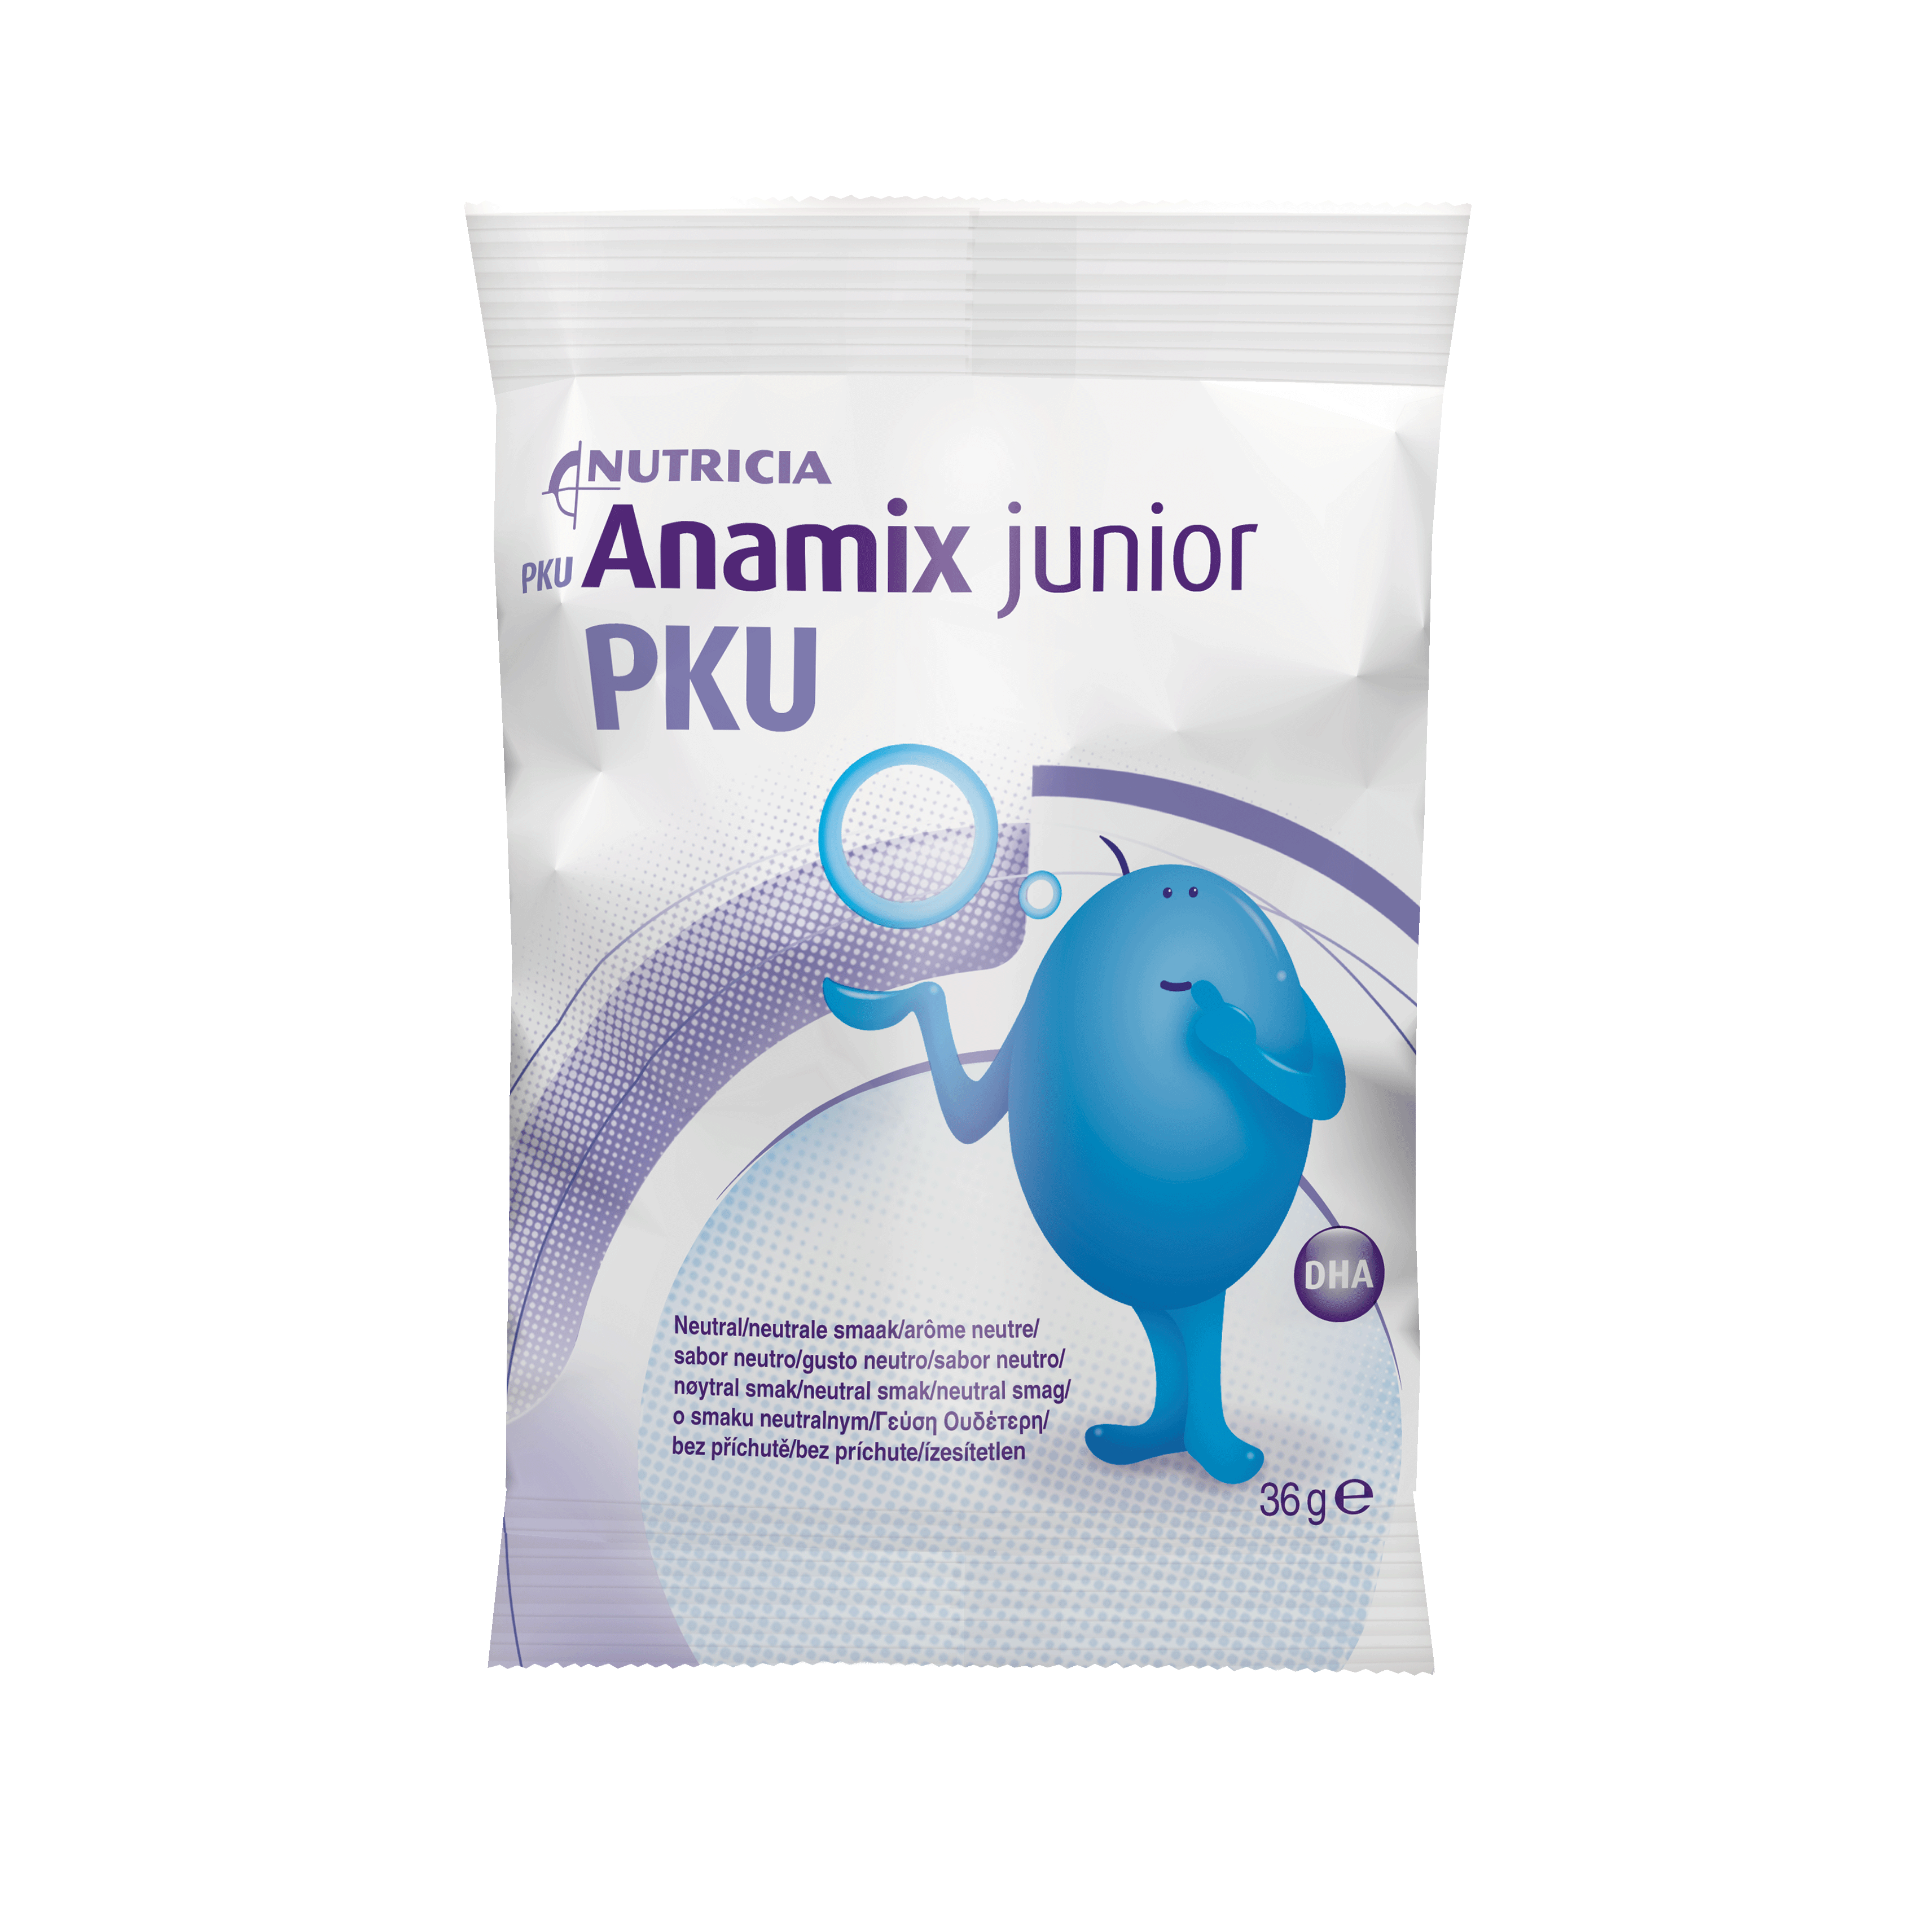 PKU Anamix Junior neutraal